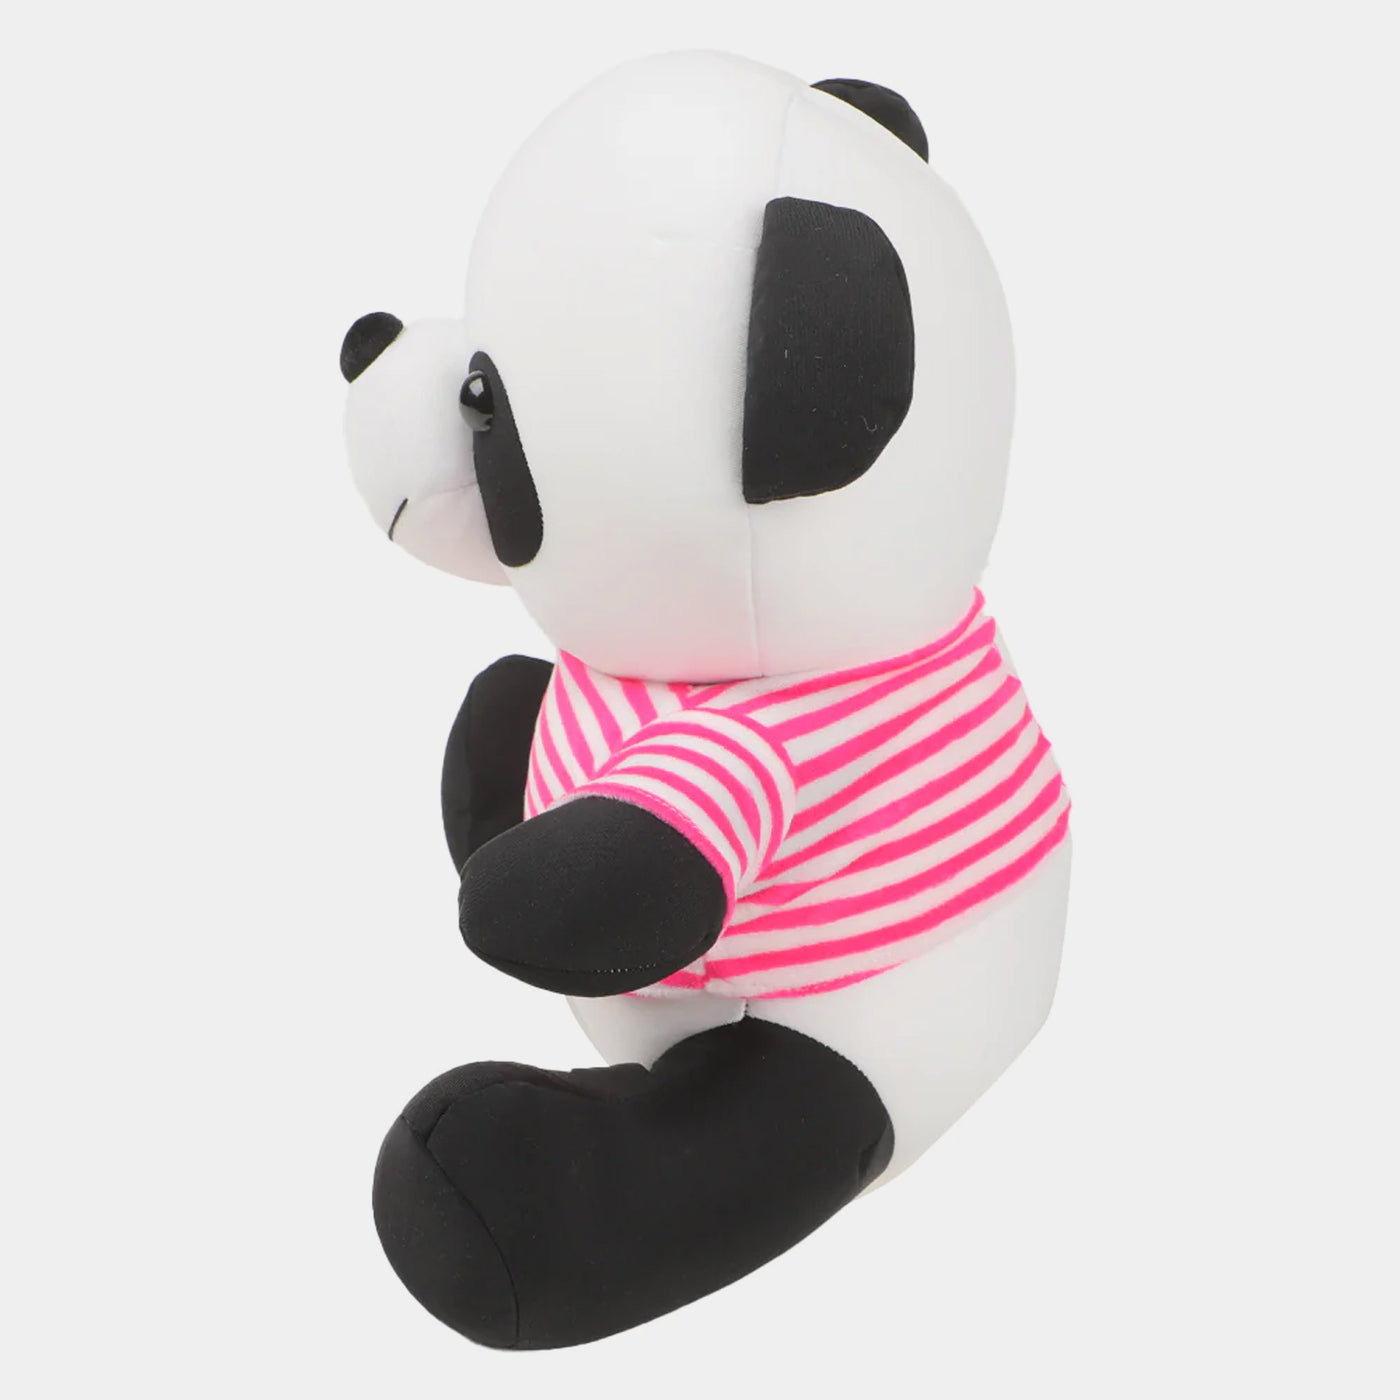 Soft Bean "Panda" Toy White/Black For Kids